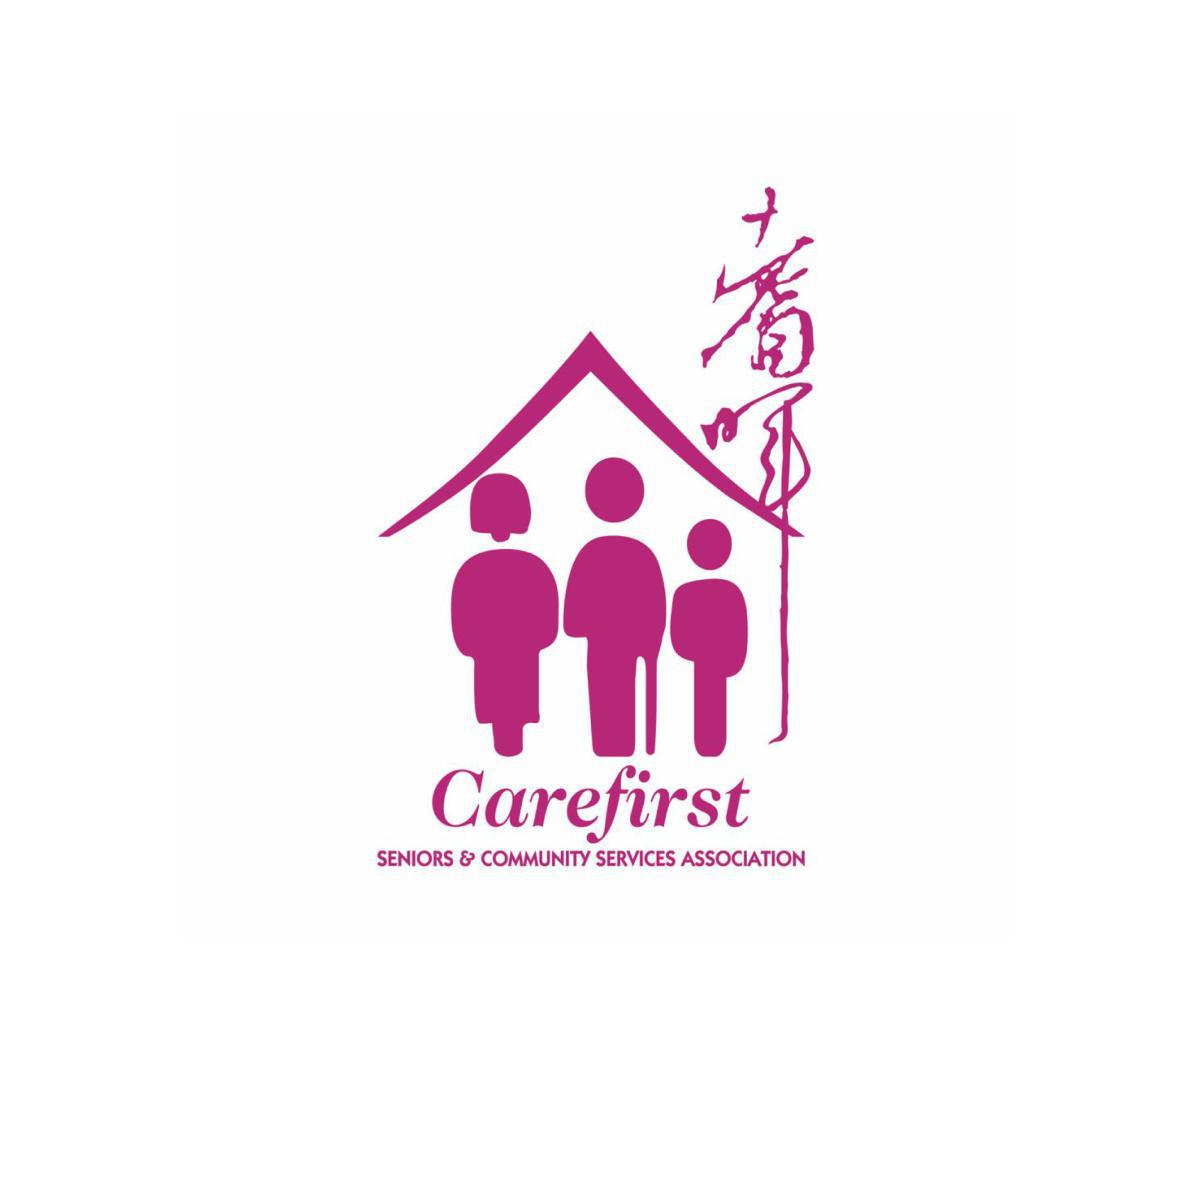 Thank you Carefirst!